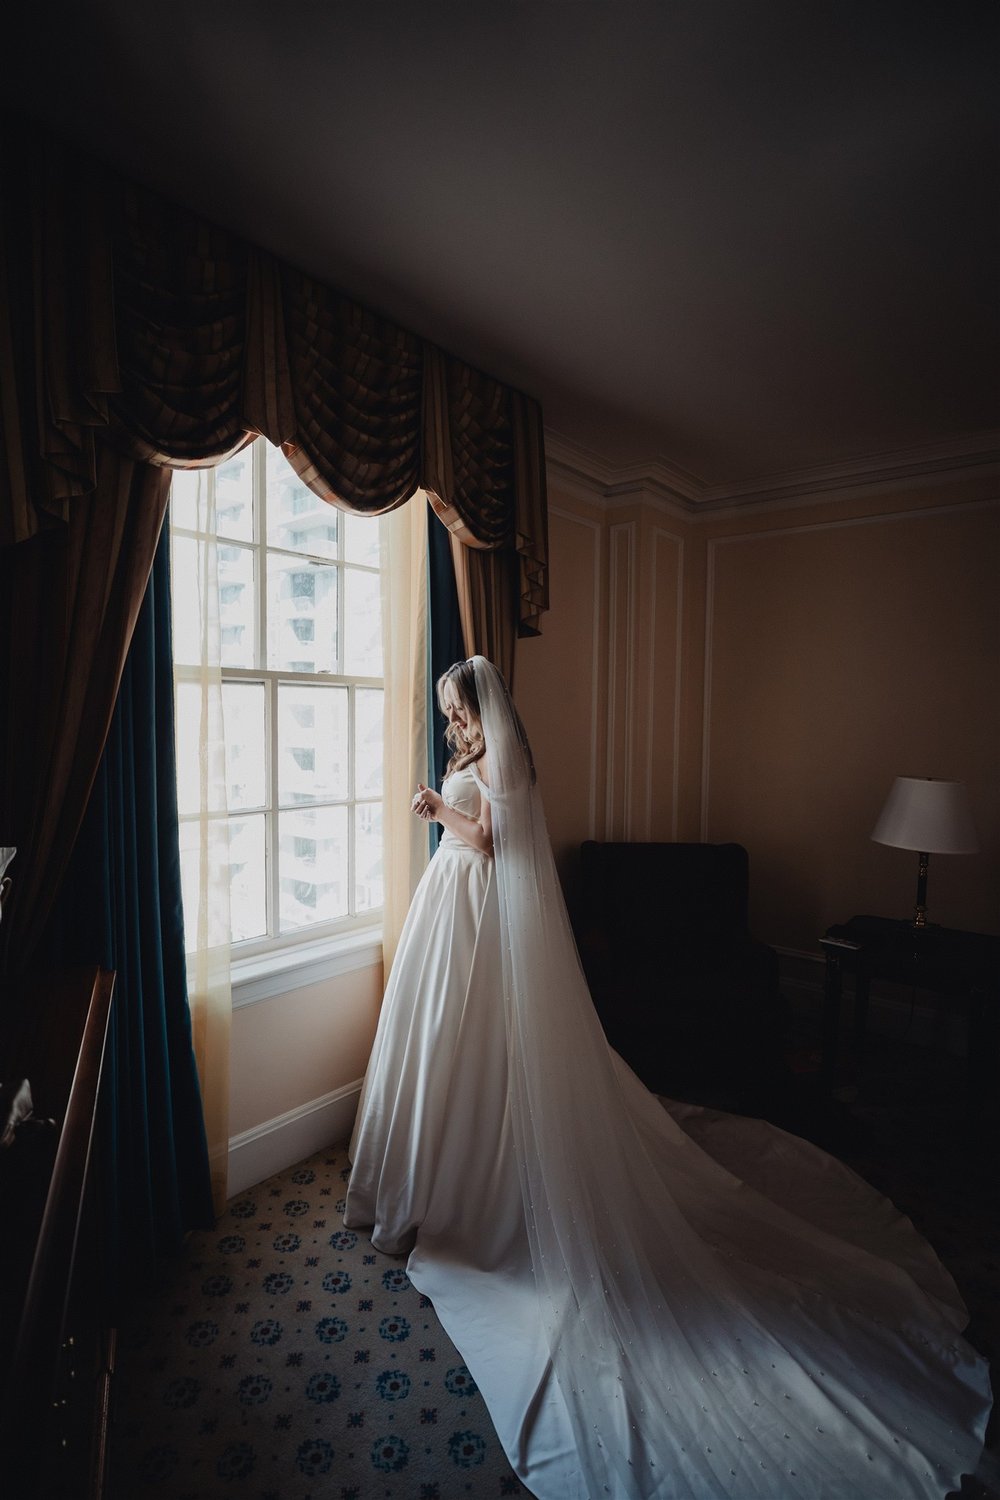 Bride Portrait at Oviatt Penthouse, wedding photo taken by Lulan Studio